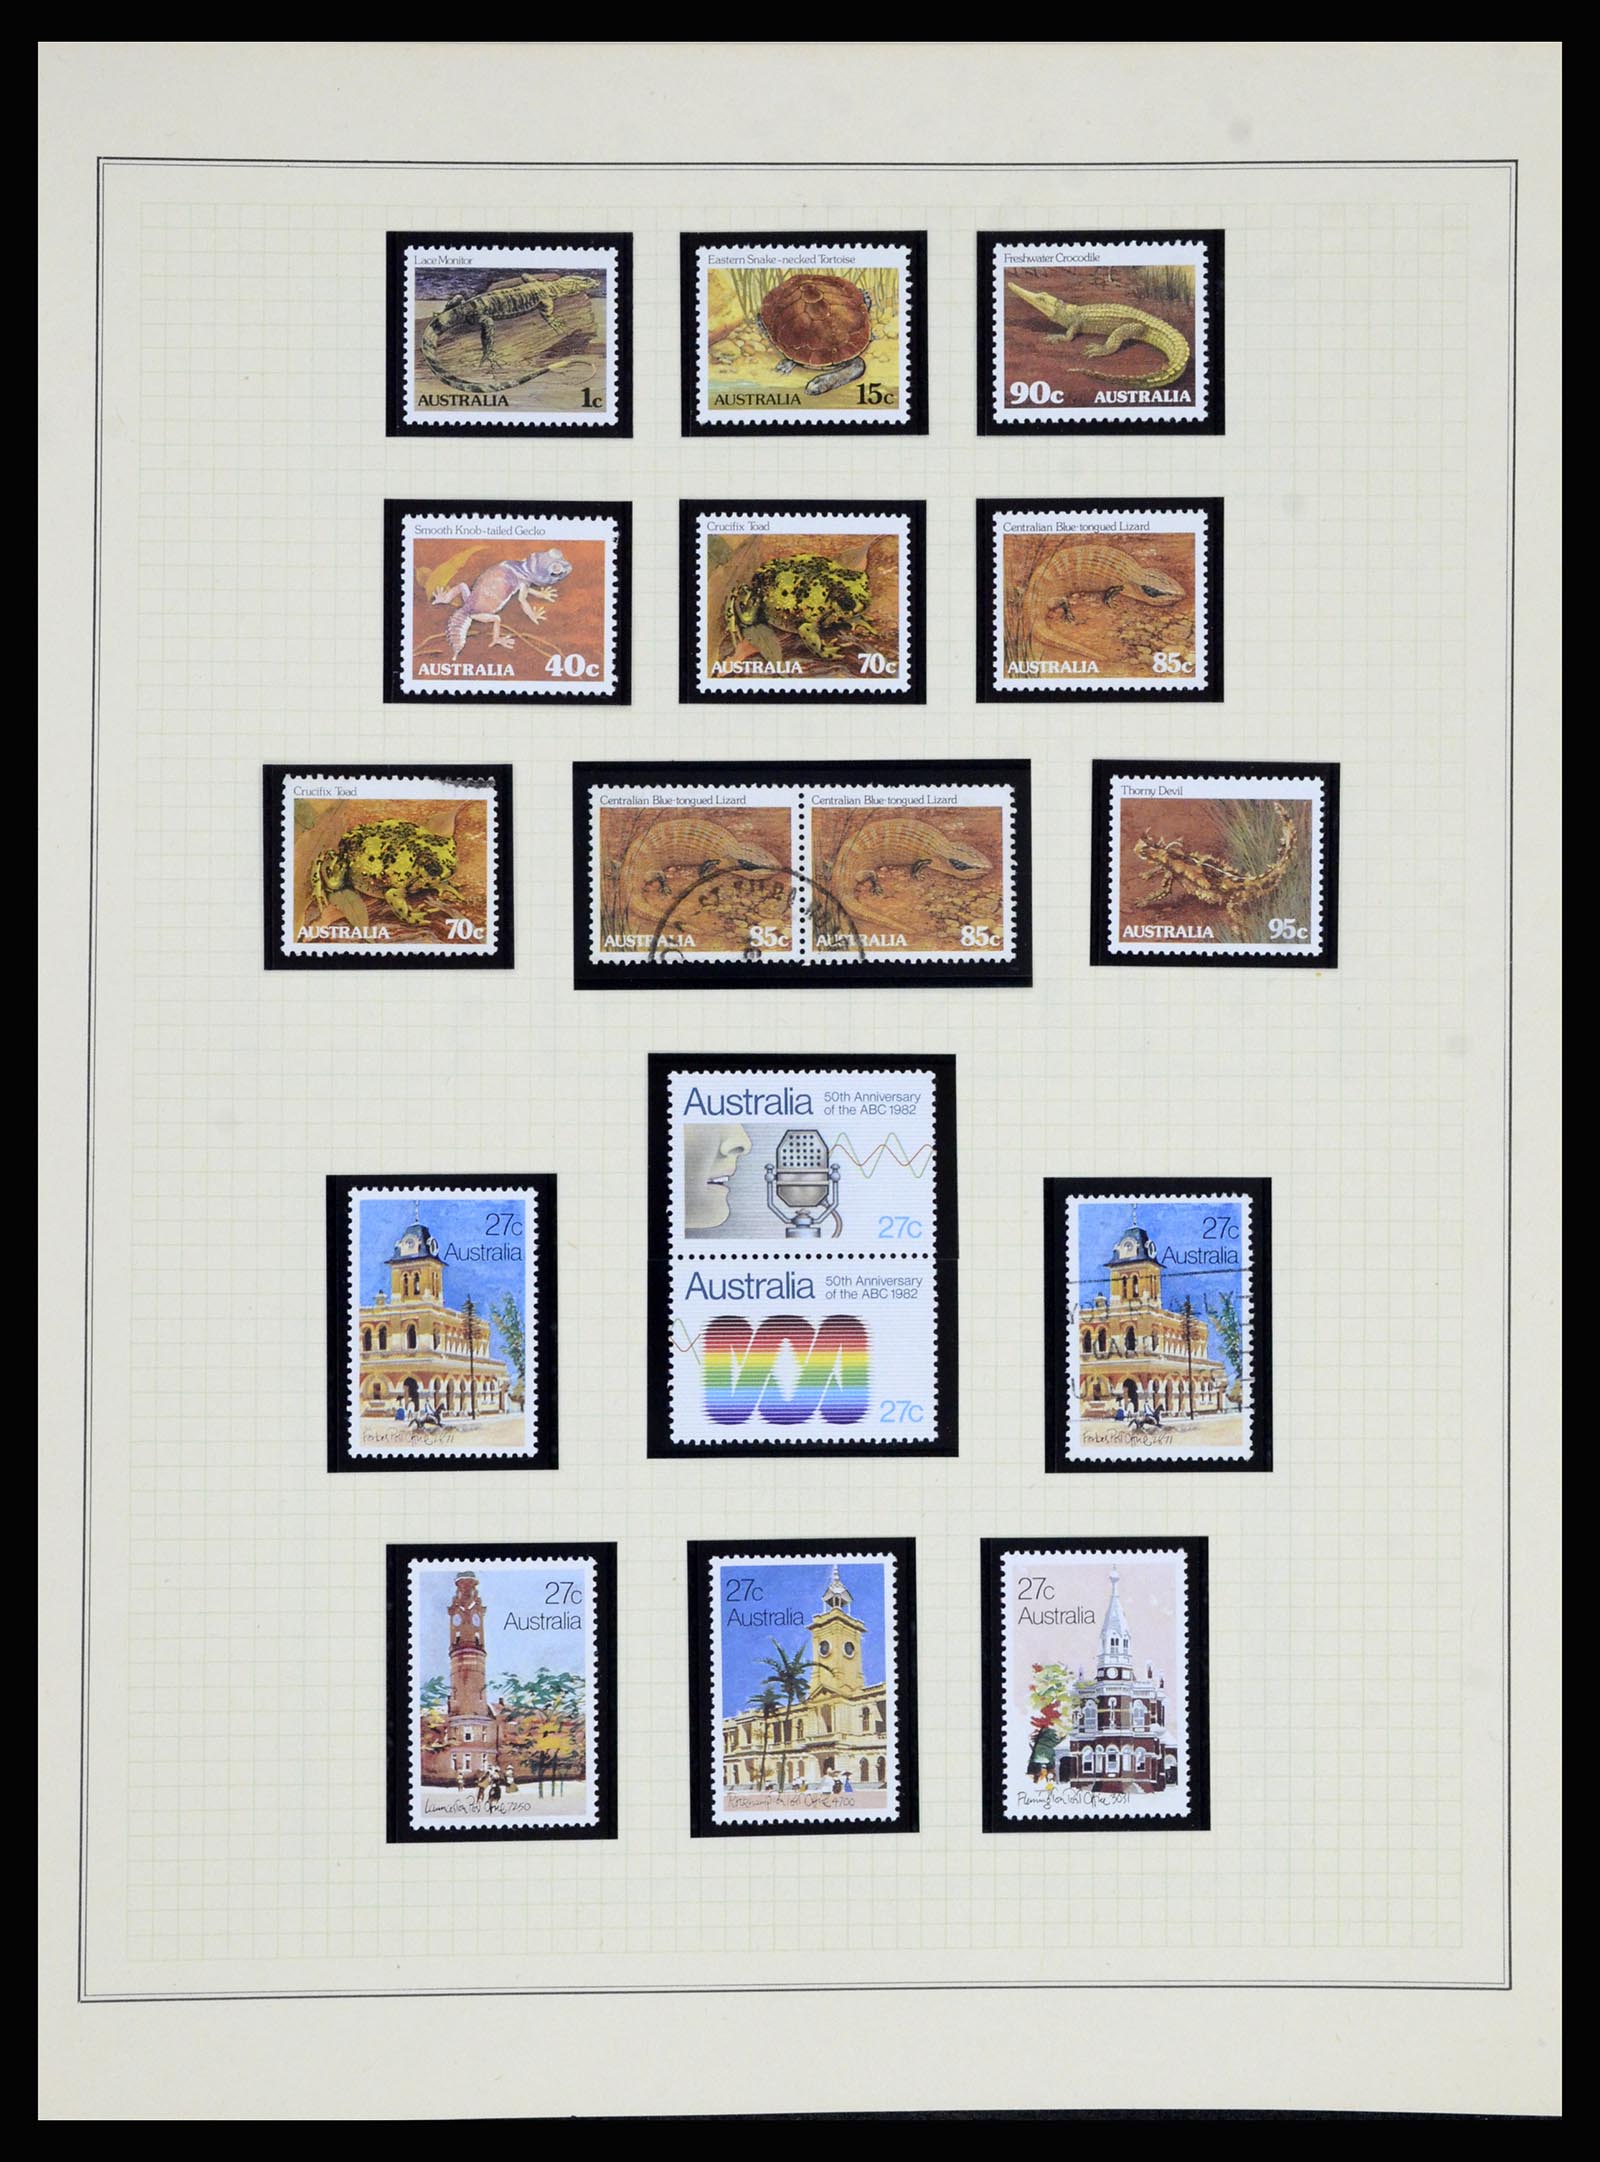 37049 080 - Stamp collection 37049 Australia 1913-1990.